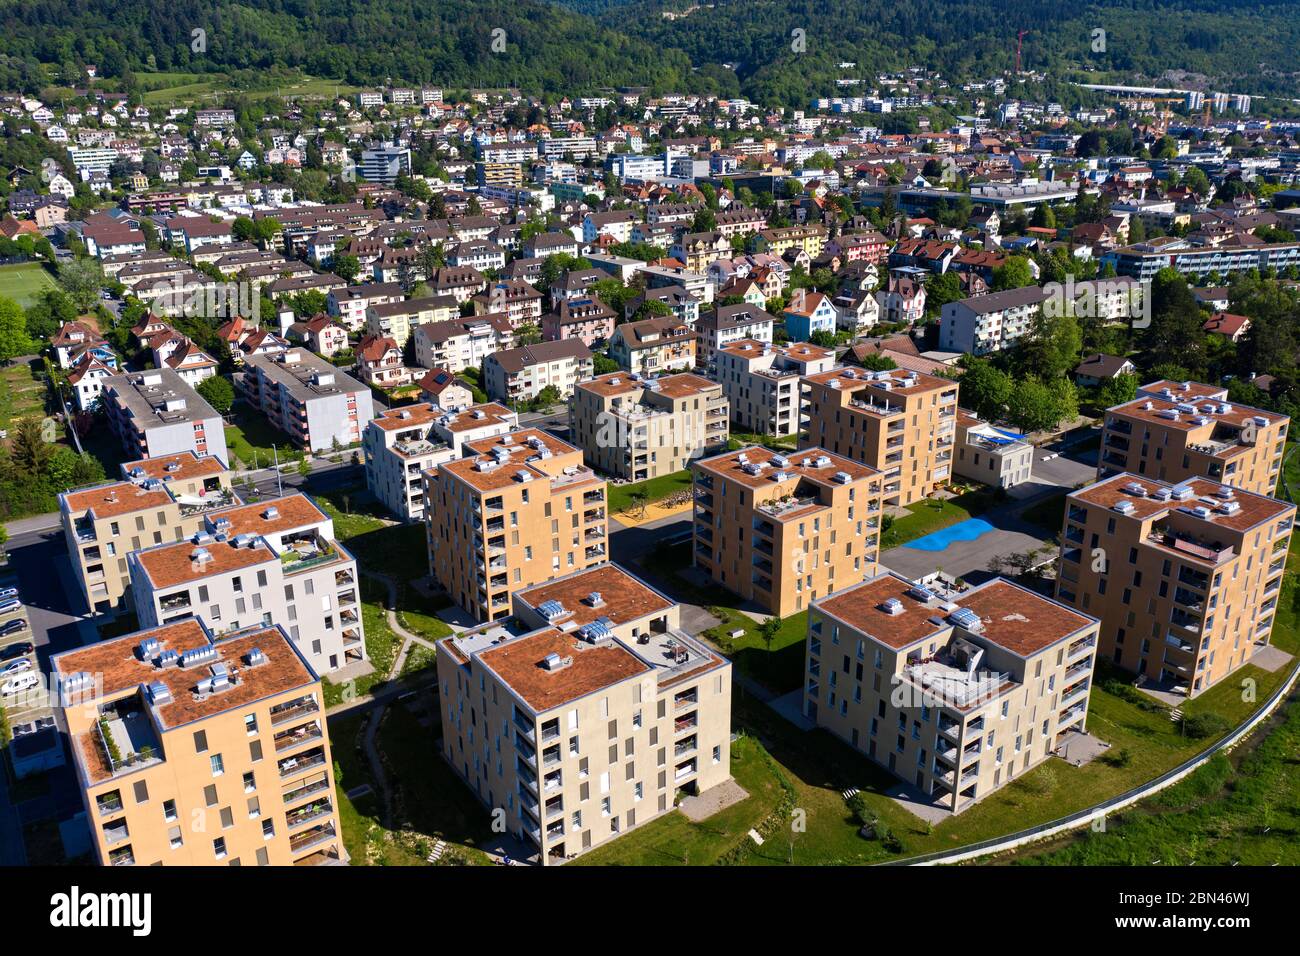 Jardin du Paradis residential park in the Gurzelen district, Biel, Switzerland Stock Photo